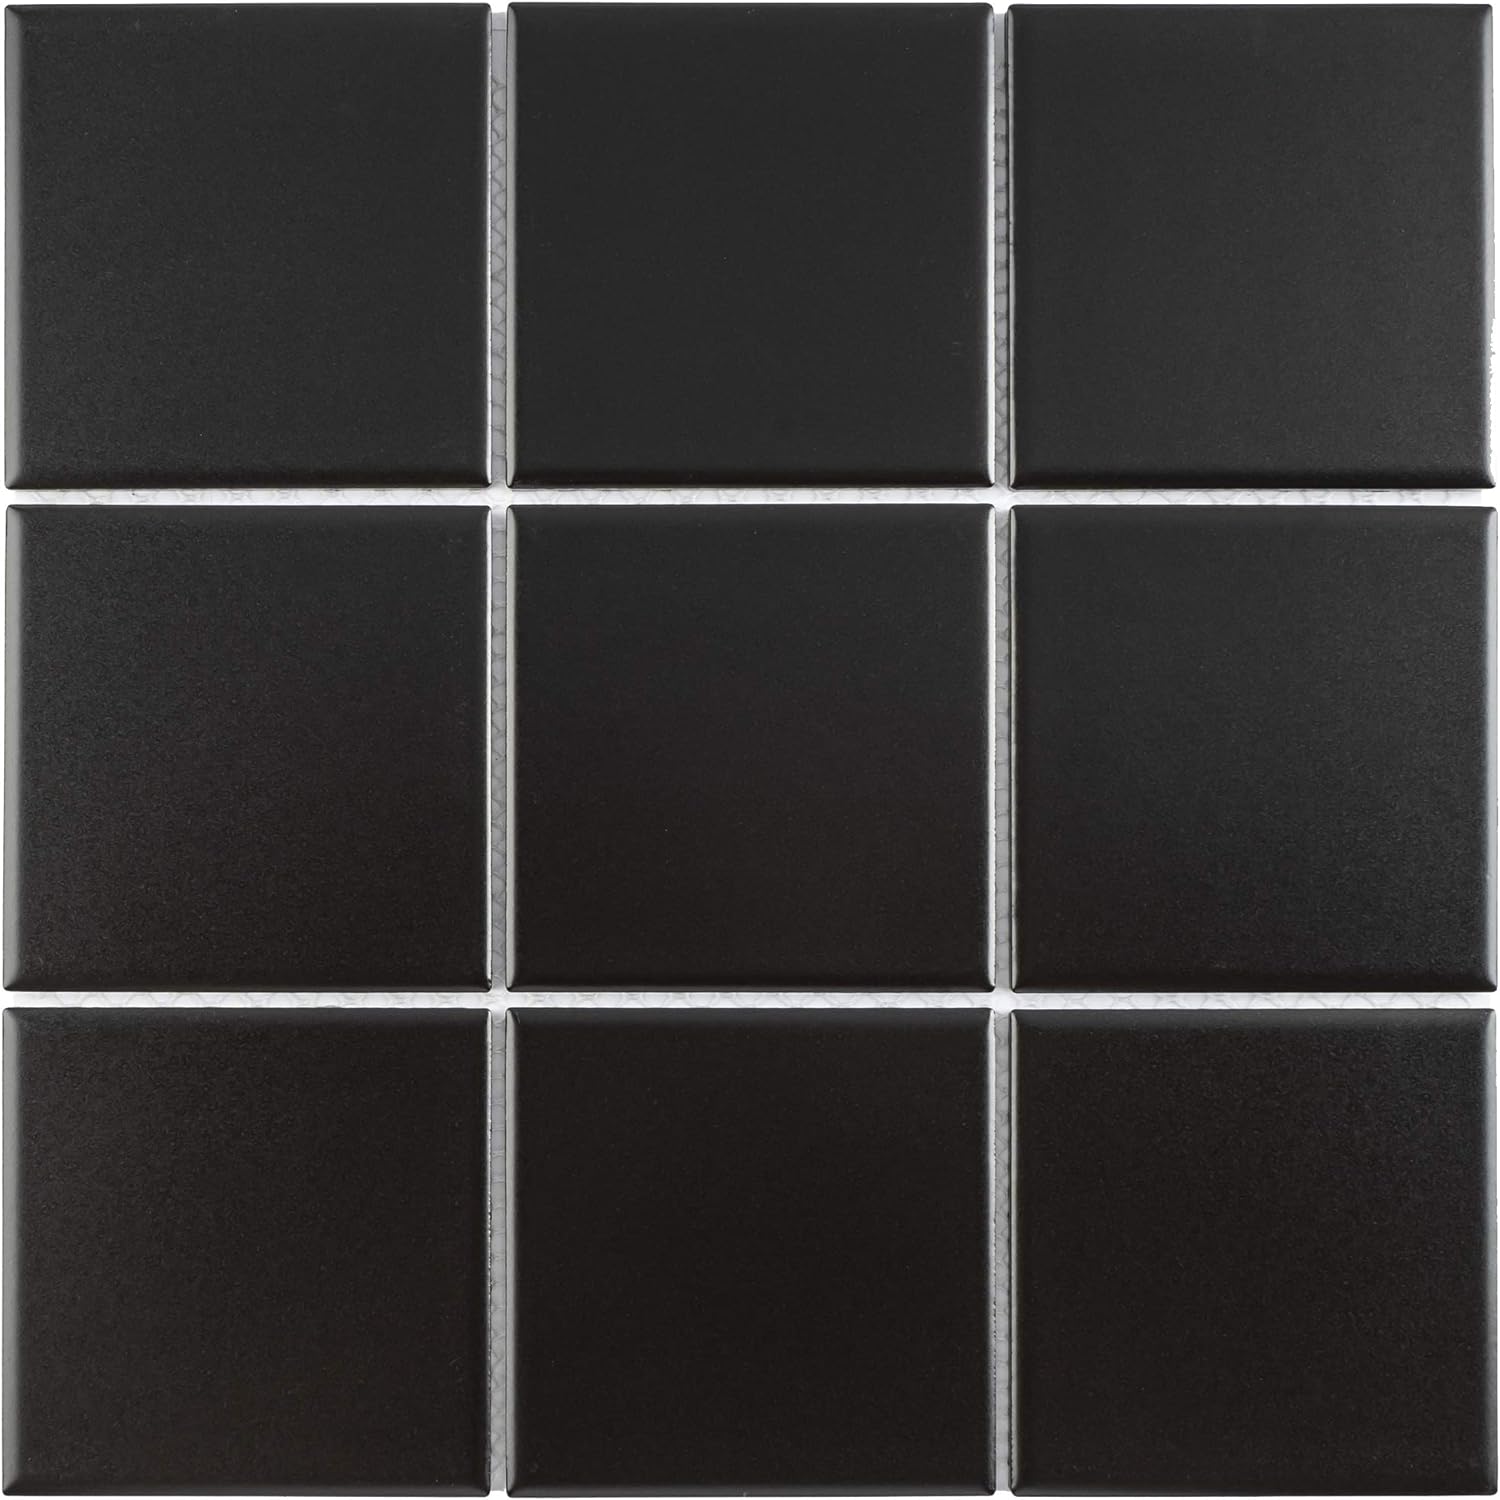 BT-PM14 4" x 4" Square Black Porcelain (Matt Finish) Floor & Wall Tile Mosaic Tile